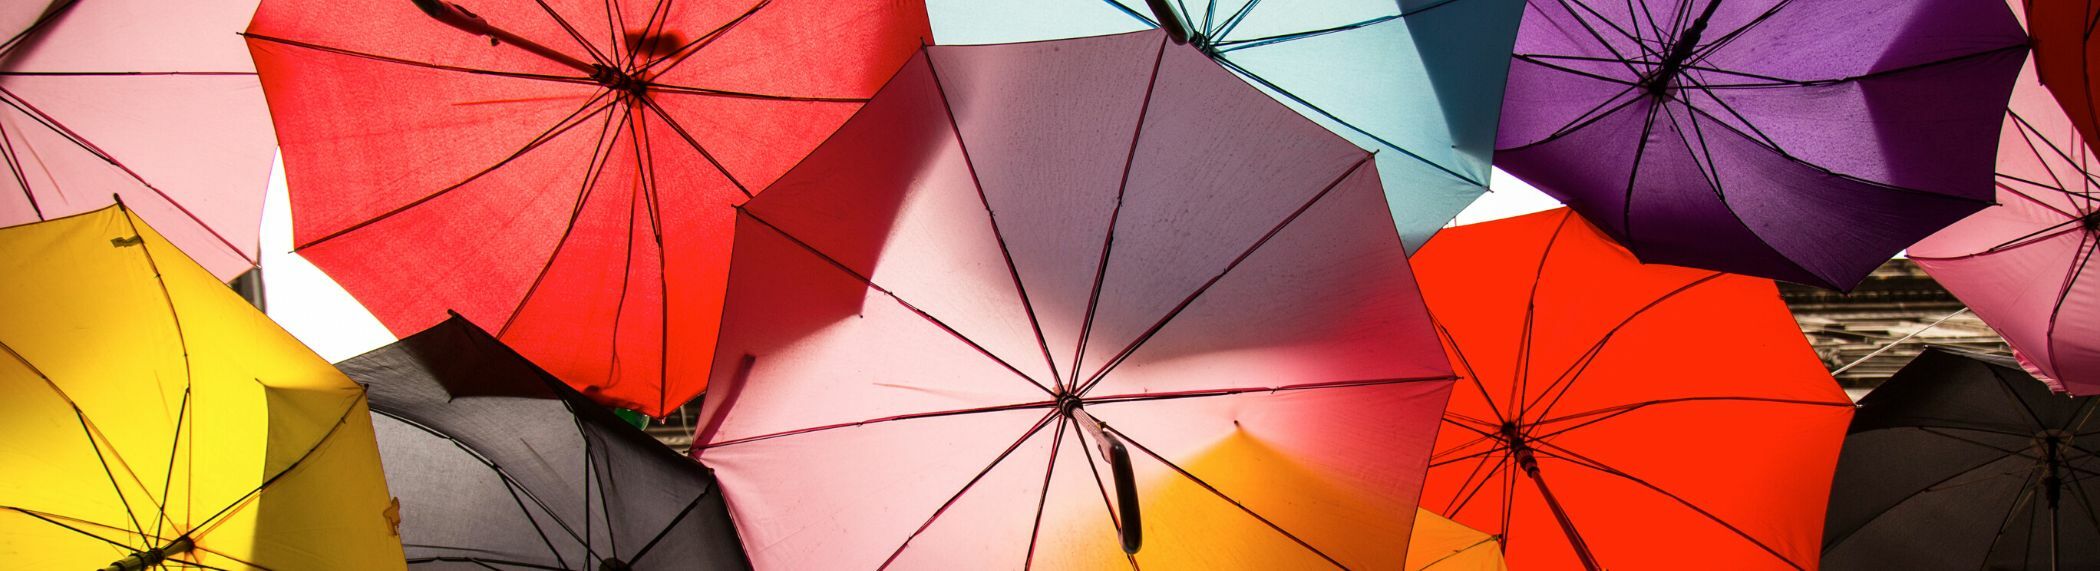 Image of colorful open umbrellas